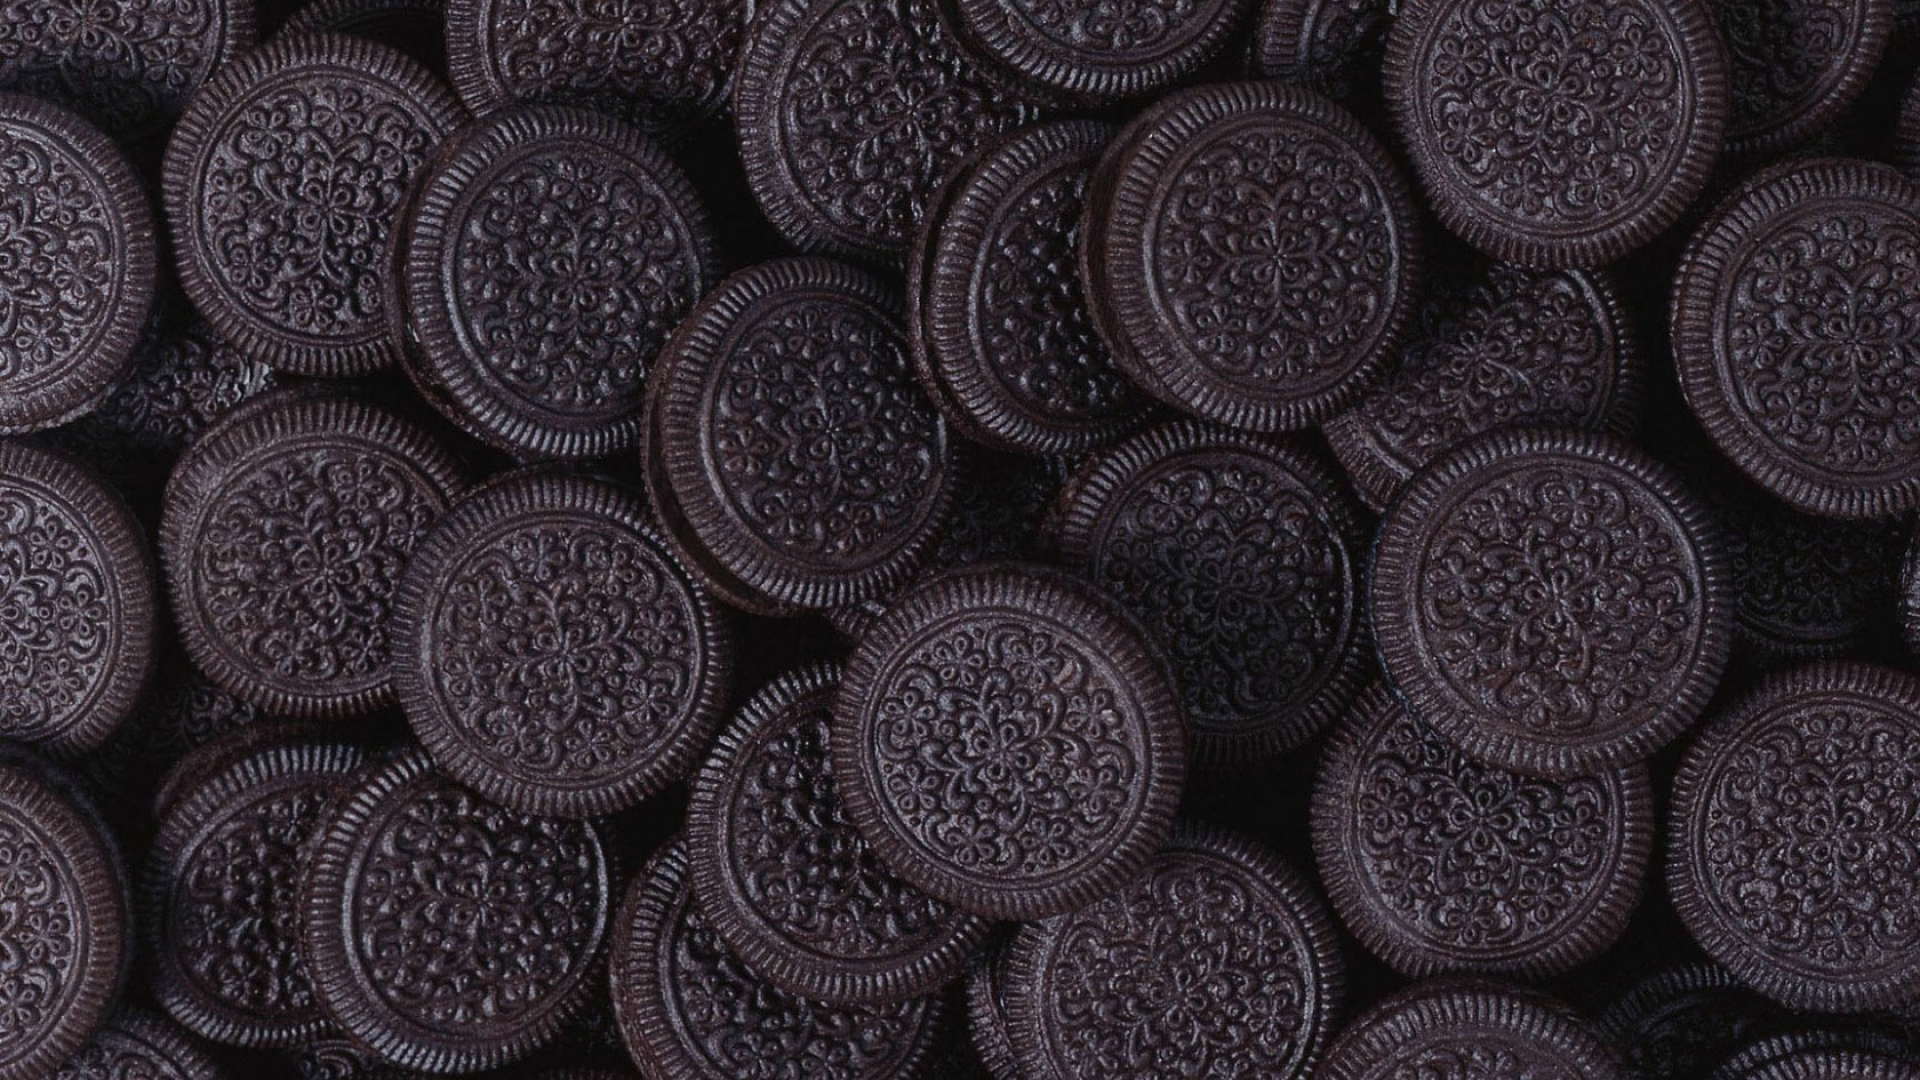 General 1920x1080 Oreos food pattern chocolate cookies sweets closeup